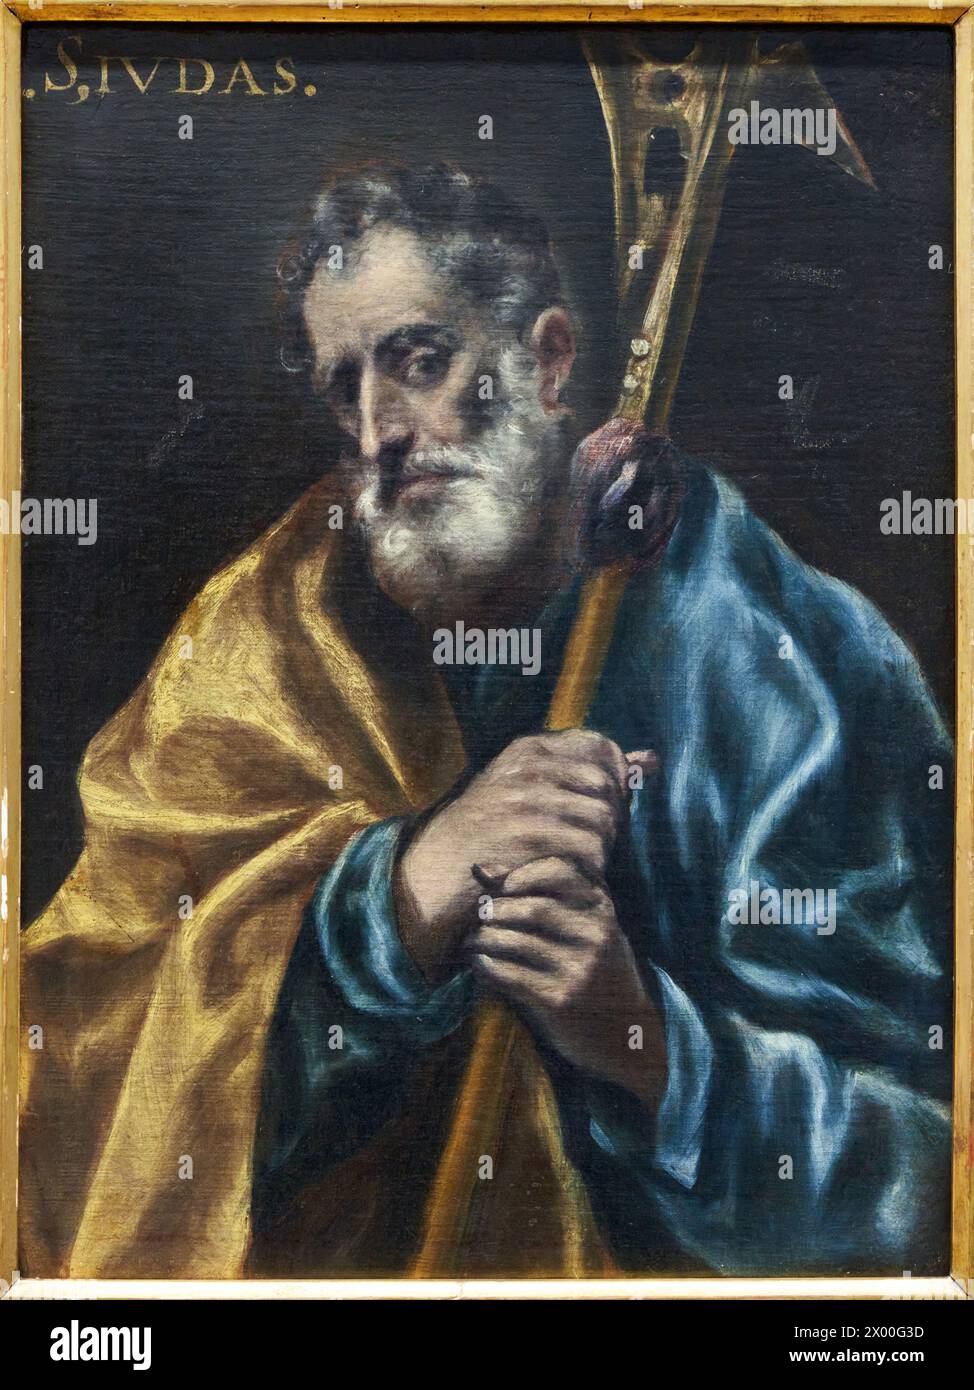 Domenikos Theotocopoulos, El Greco and Workshop, (Candia, Crete, 1541 - Toledo, 1614), Saint Jude Thaddeus the Apostle, c. 1608-1614, Fine Arts Museum, Museo Bellas Artes, Oviedo, Asturias, Spain. Stock Photo